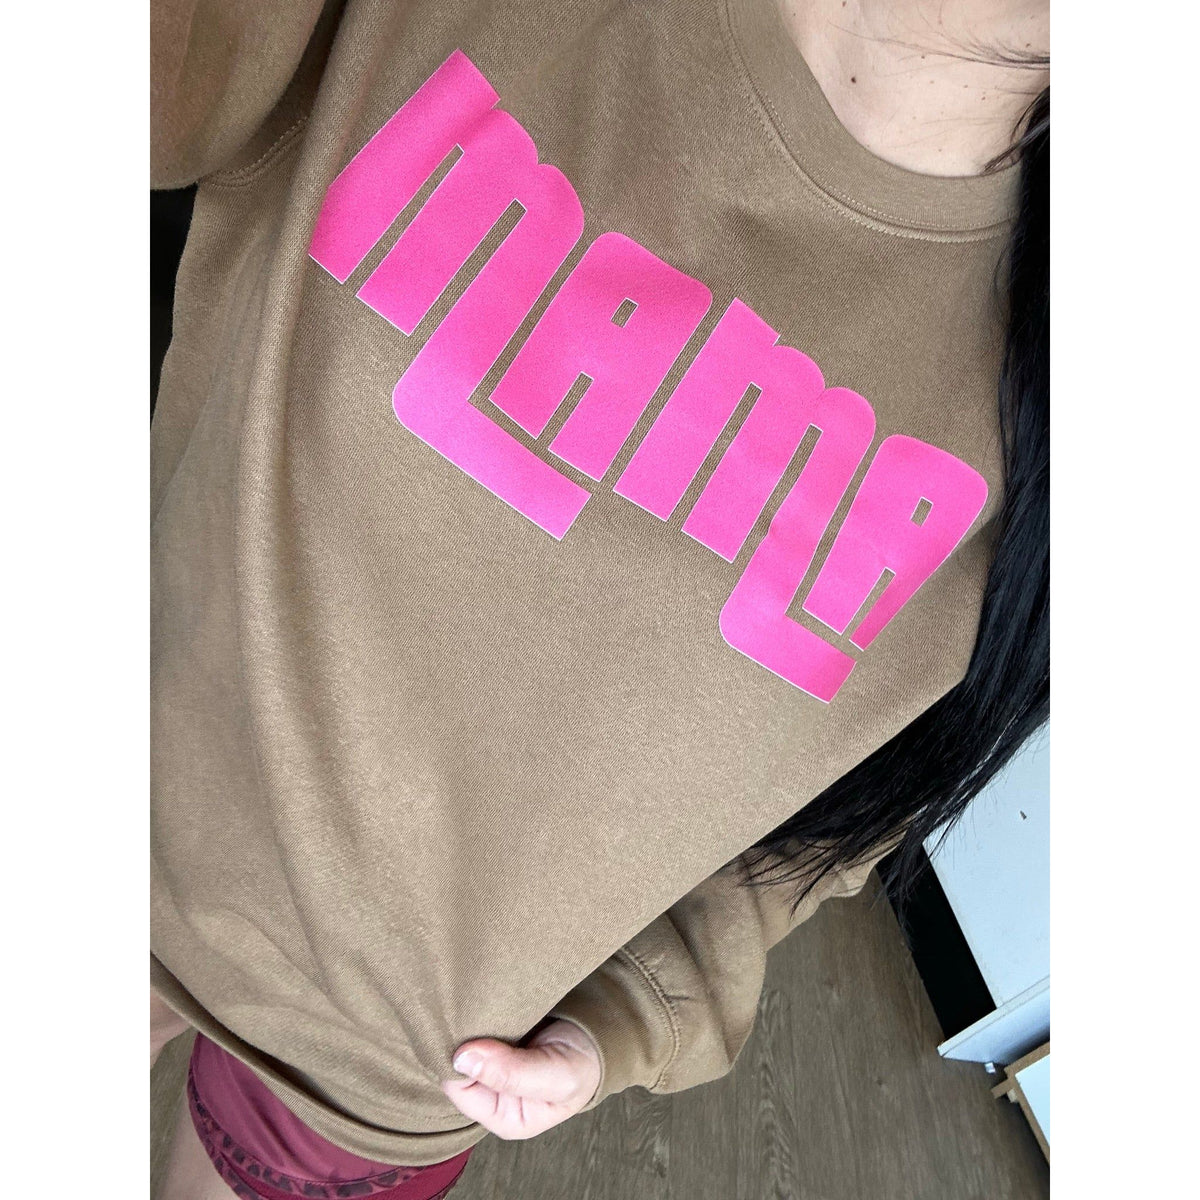 Mama Retro Pink on tee or sweatshirt